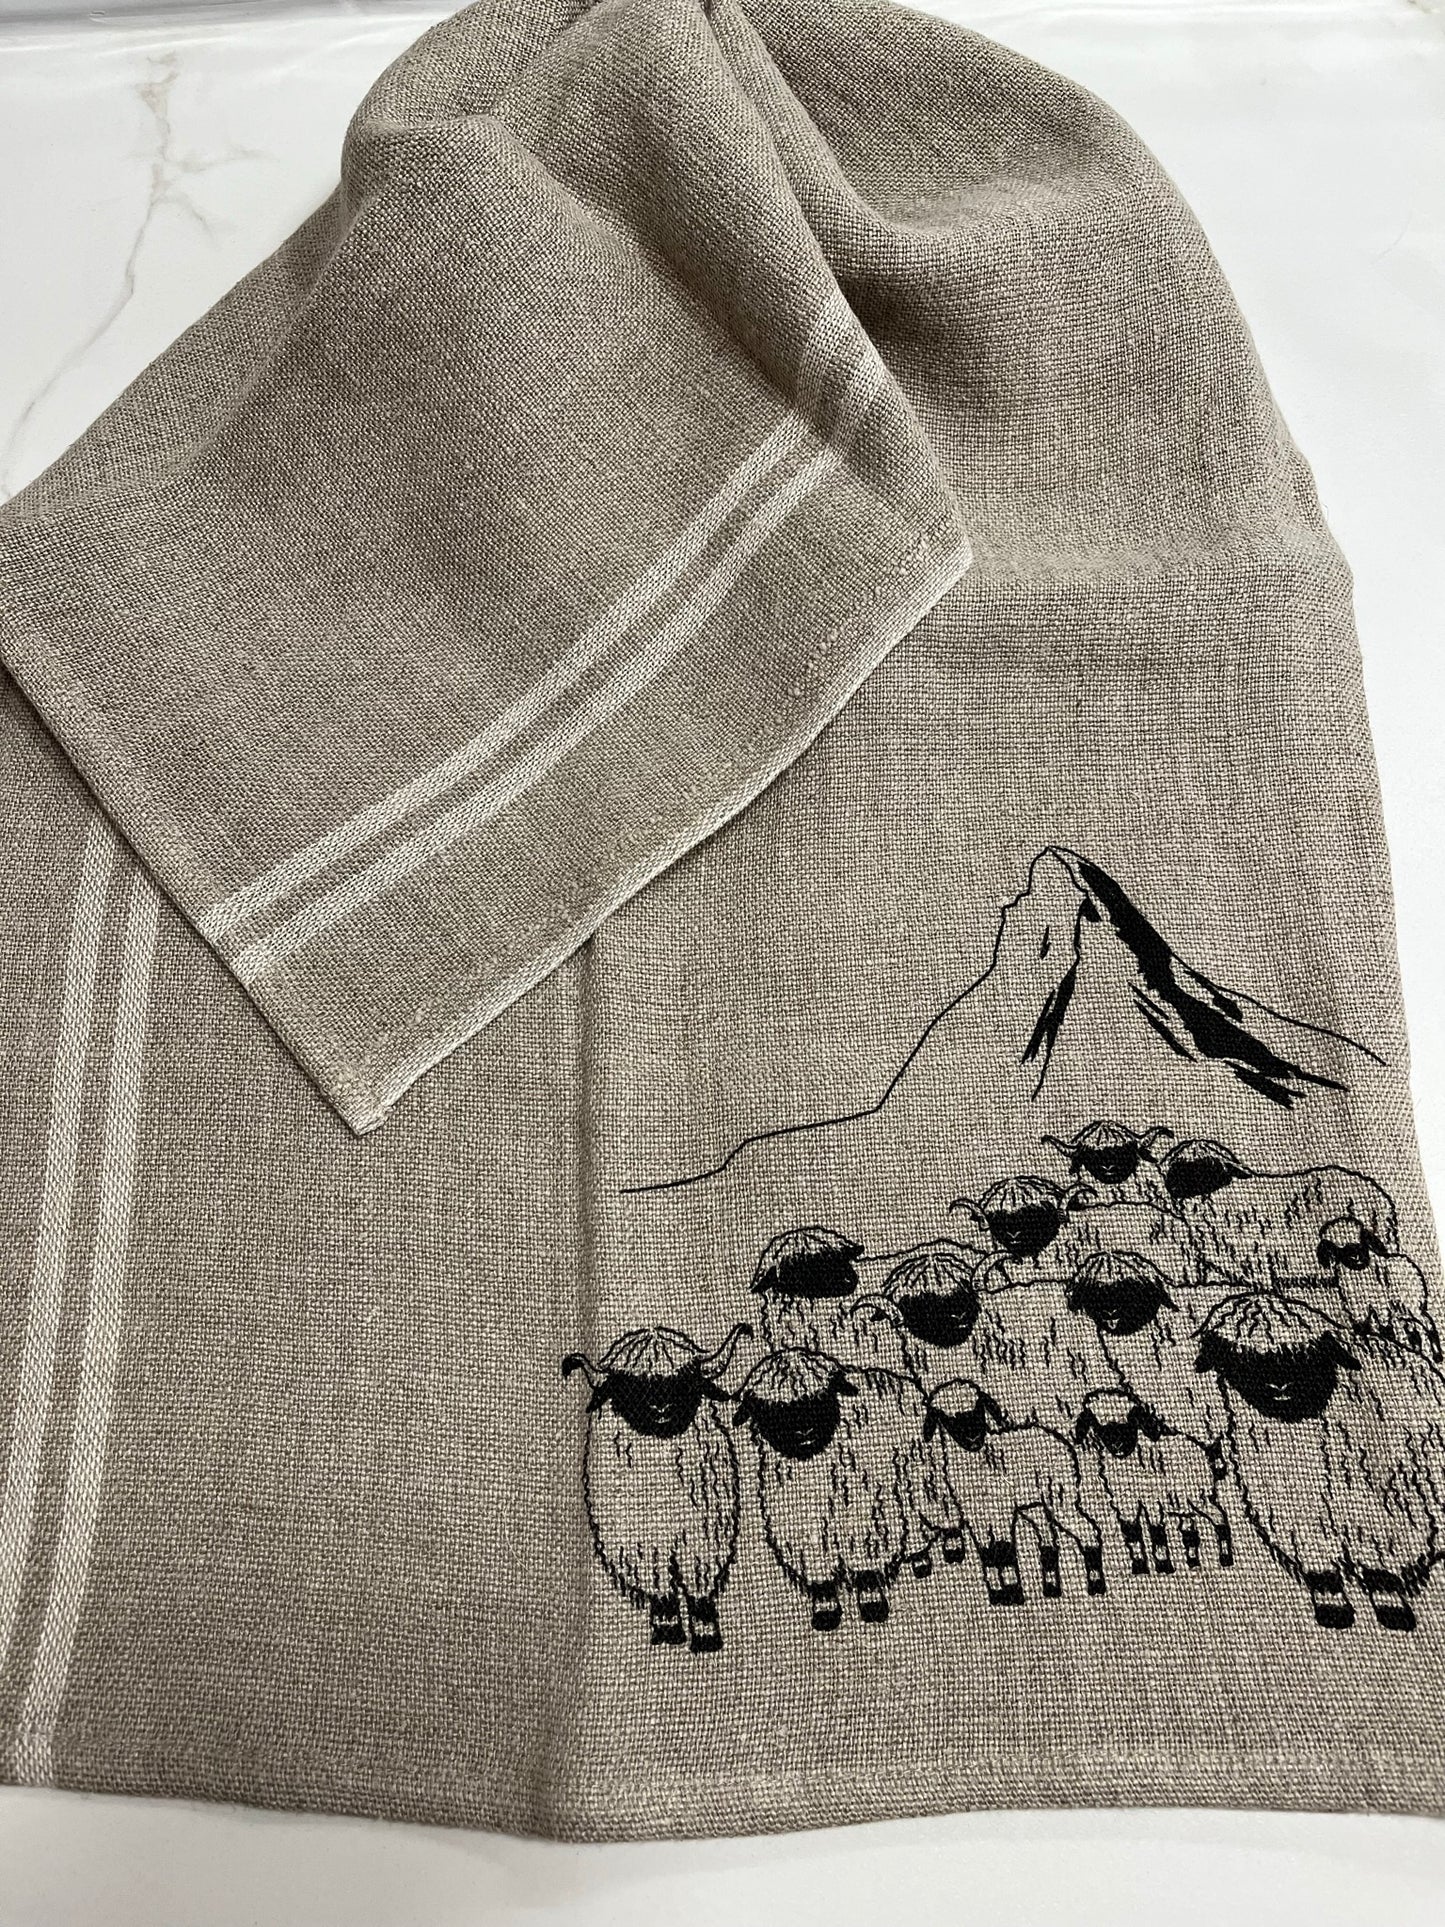 Blacknose sheep dish towel, linen w/black stripes